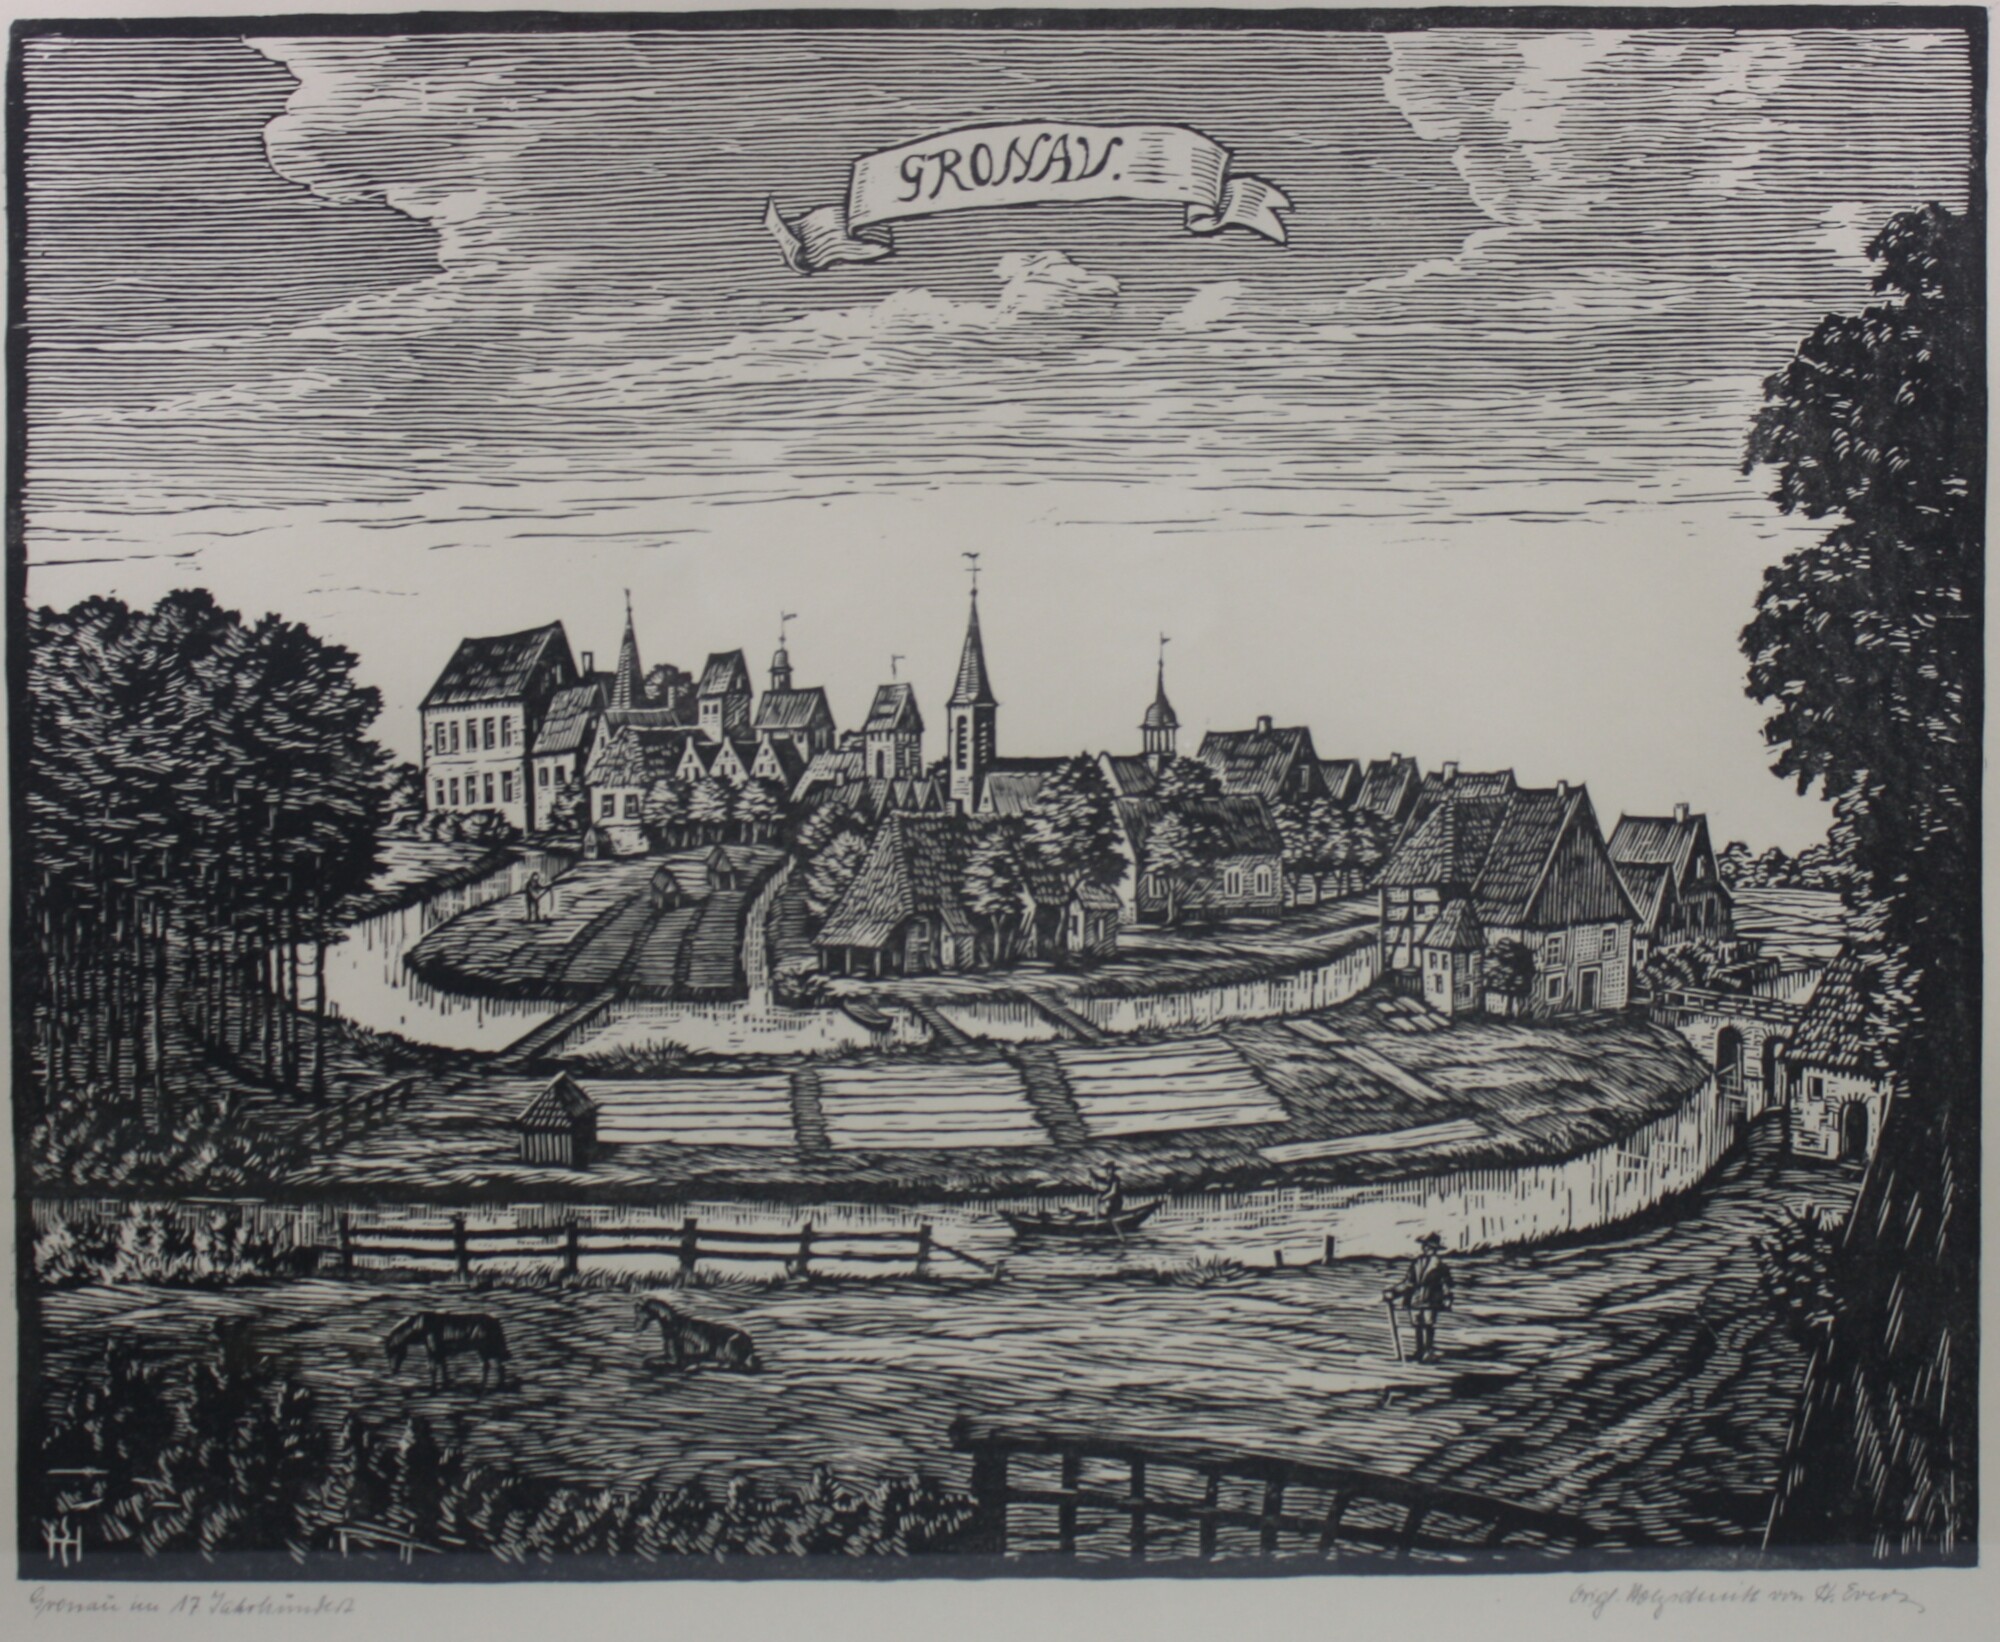 Holzschnitt: Ansicht der Stadt Gronau (Drilandmuseum CC BY-NC-SA)